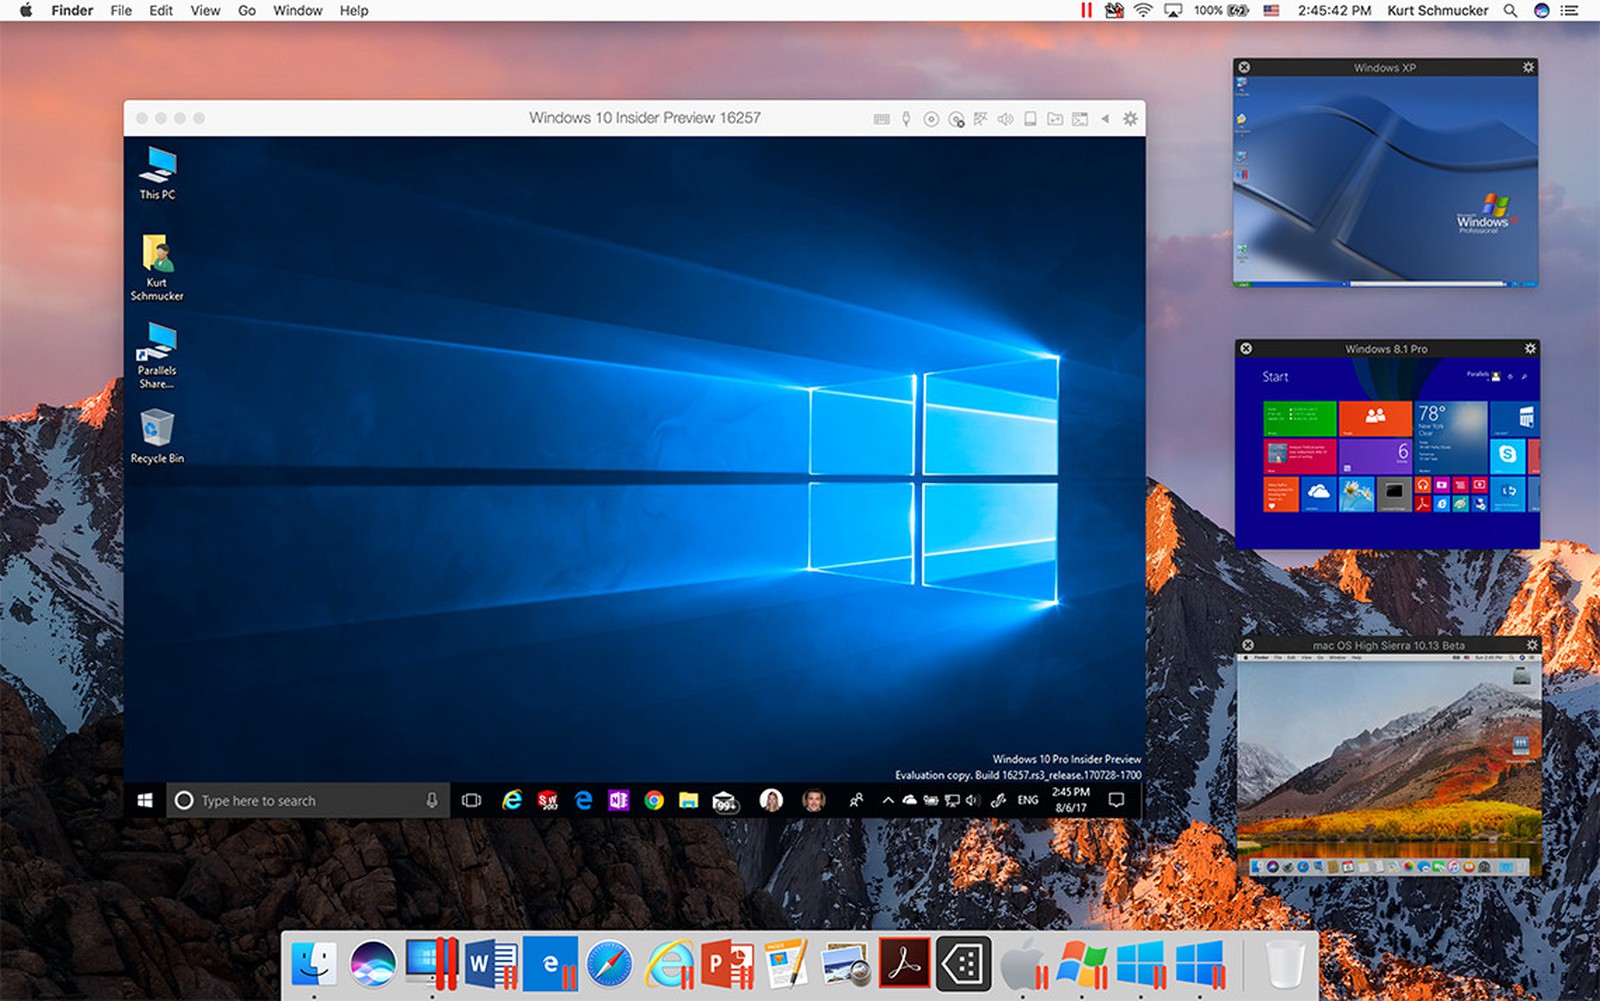 parallels desktop windows 10 resolution